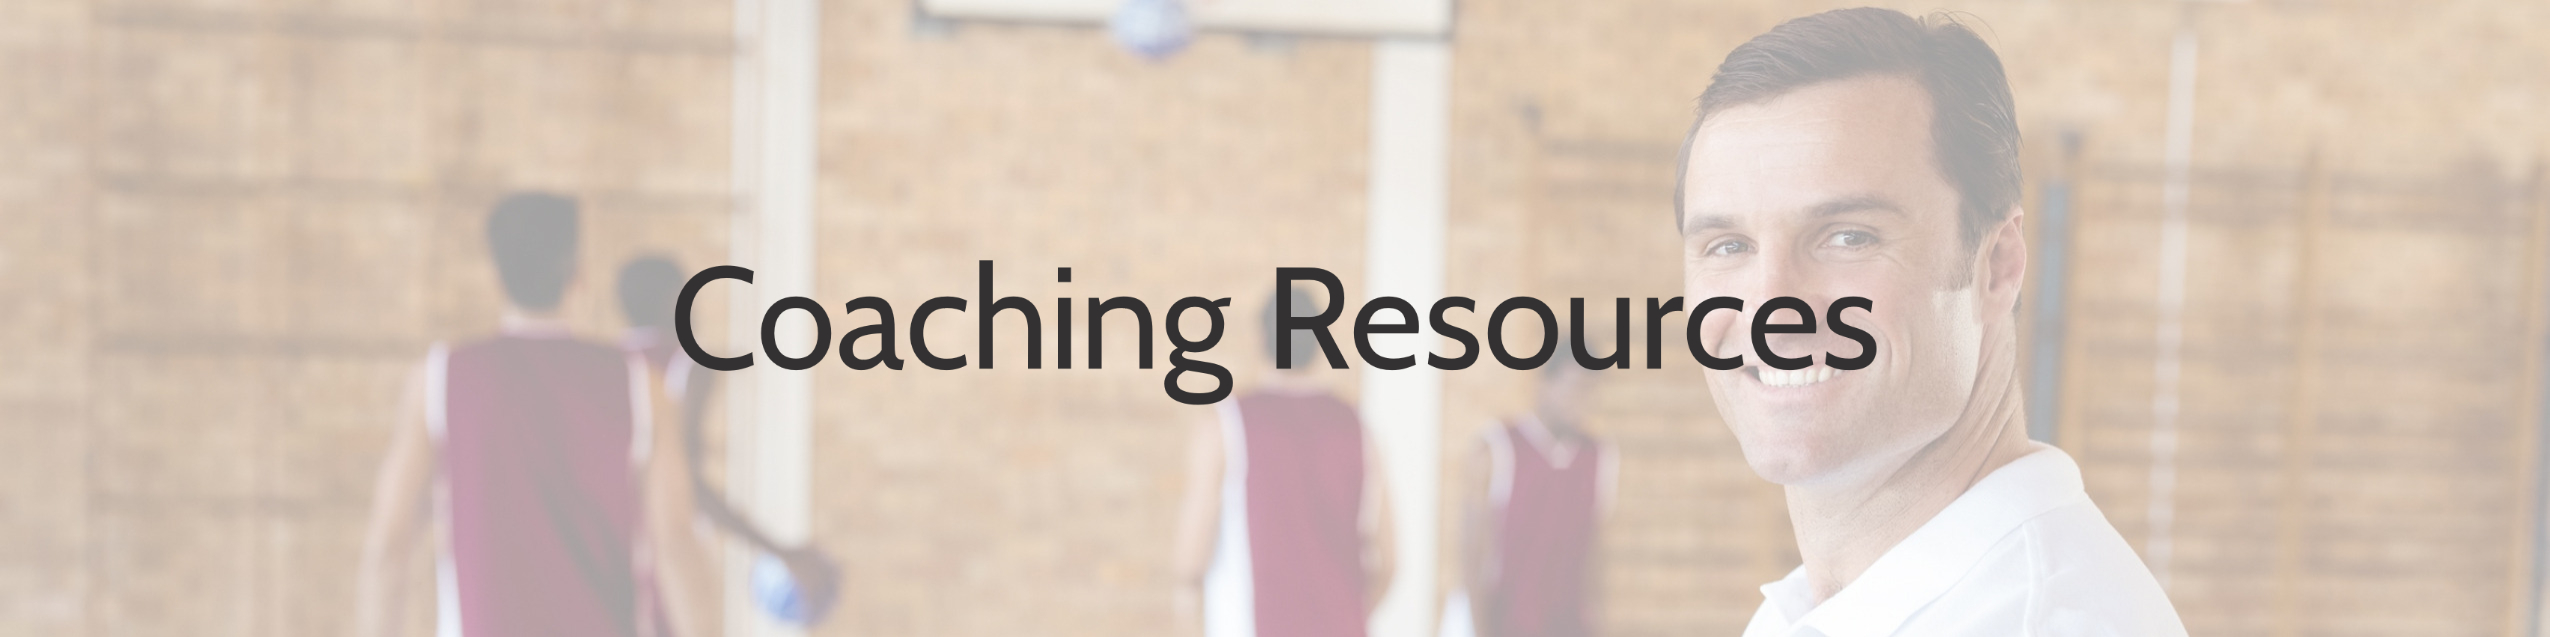 Coaching Resources